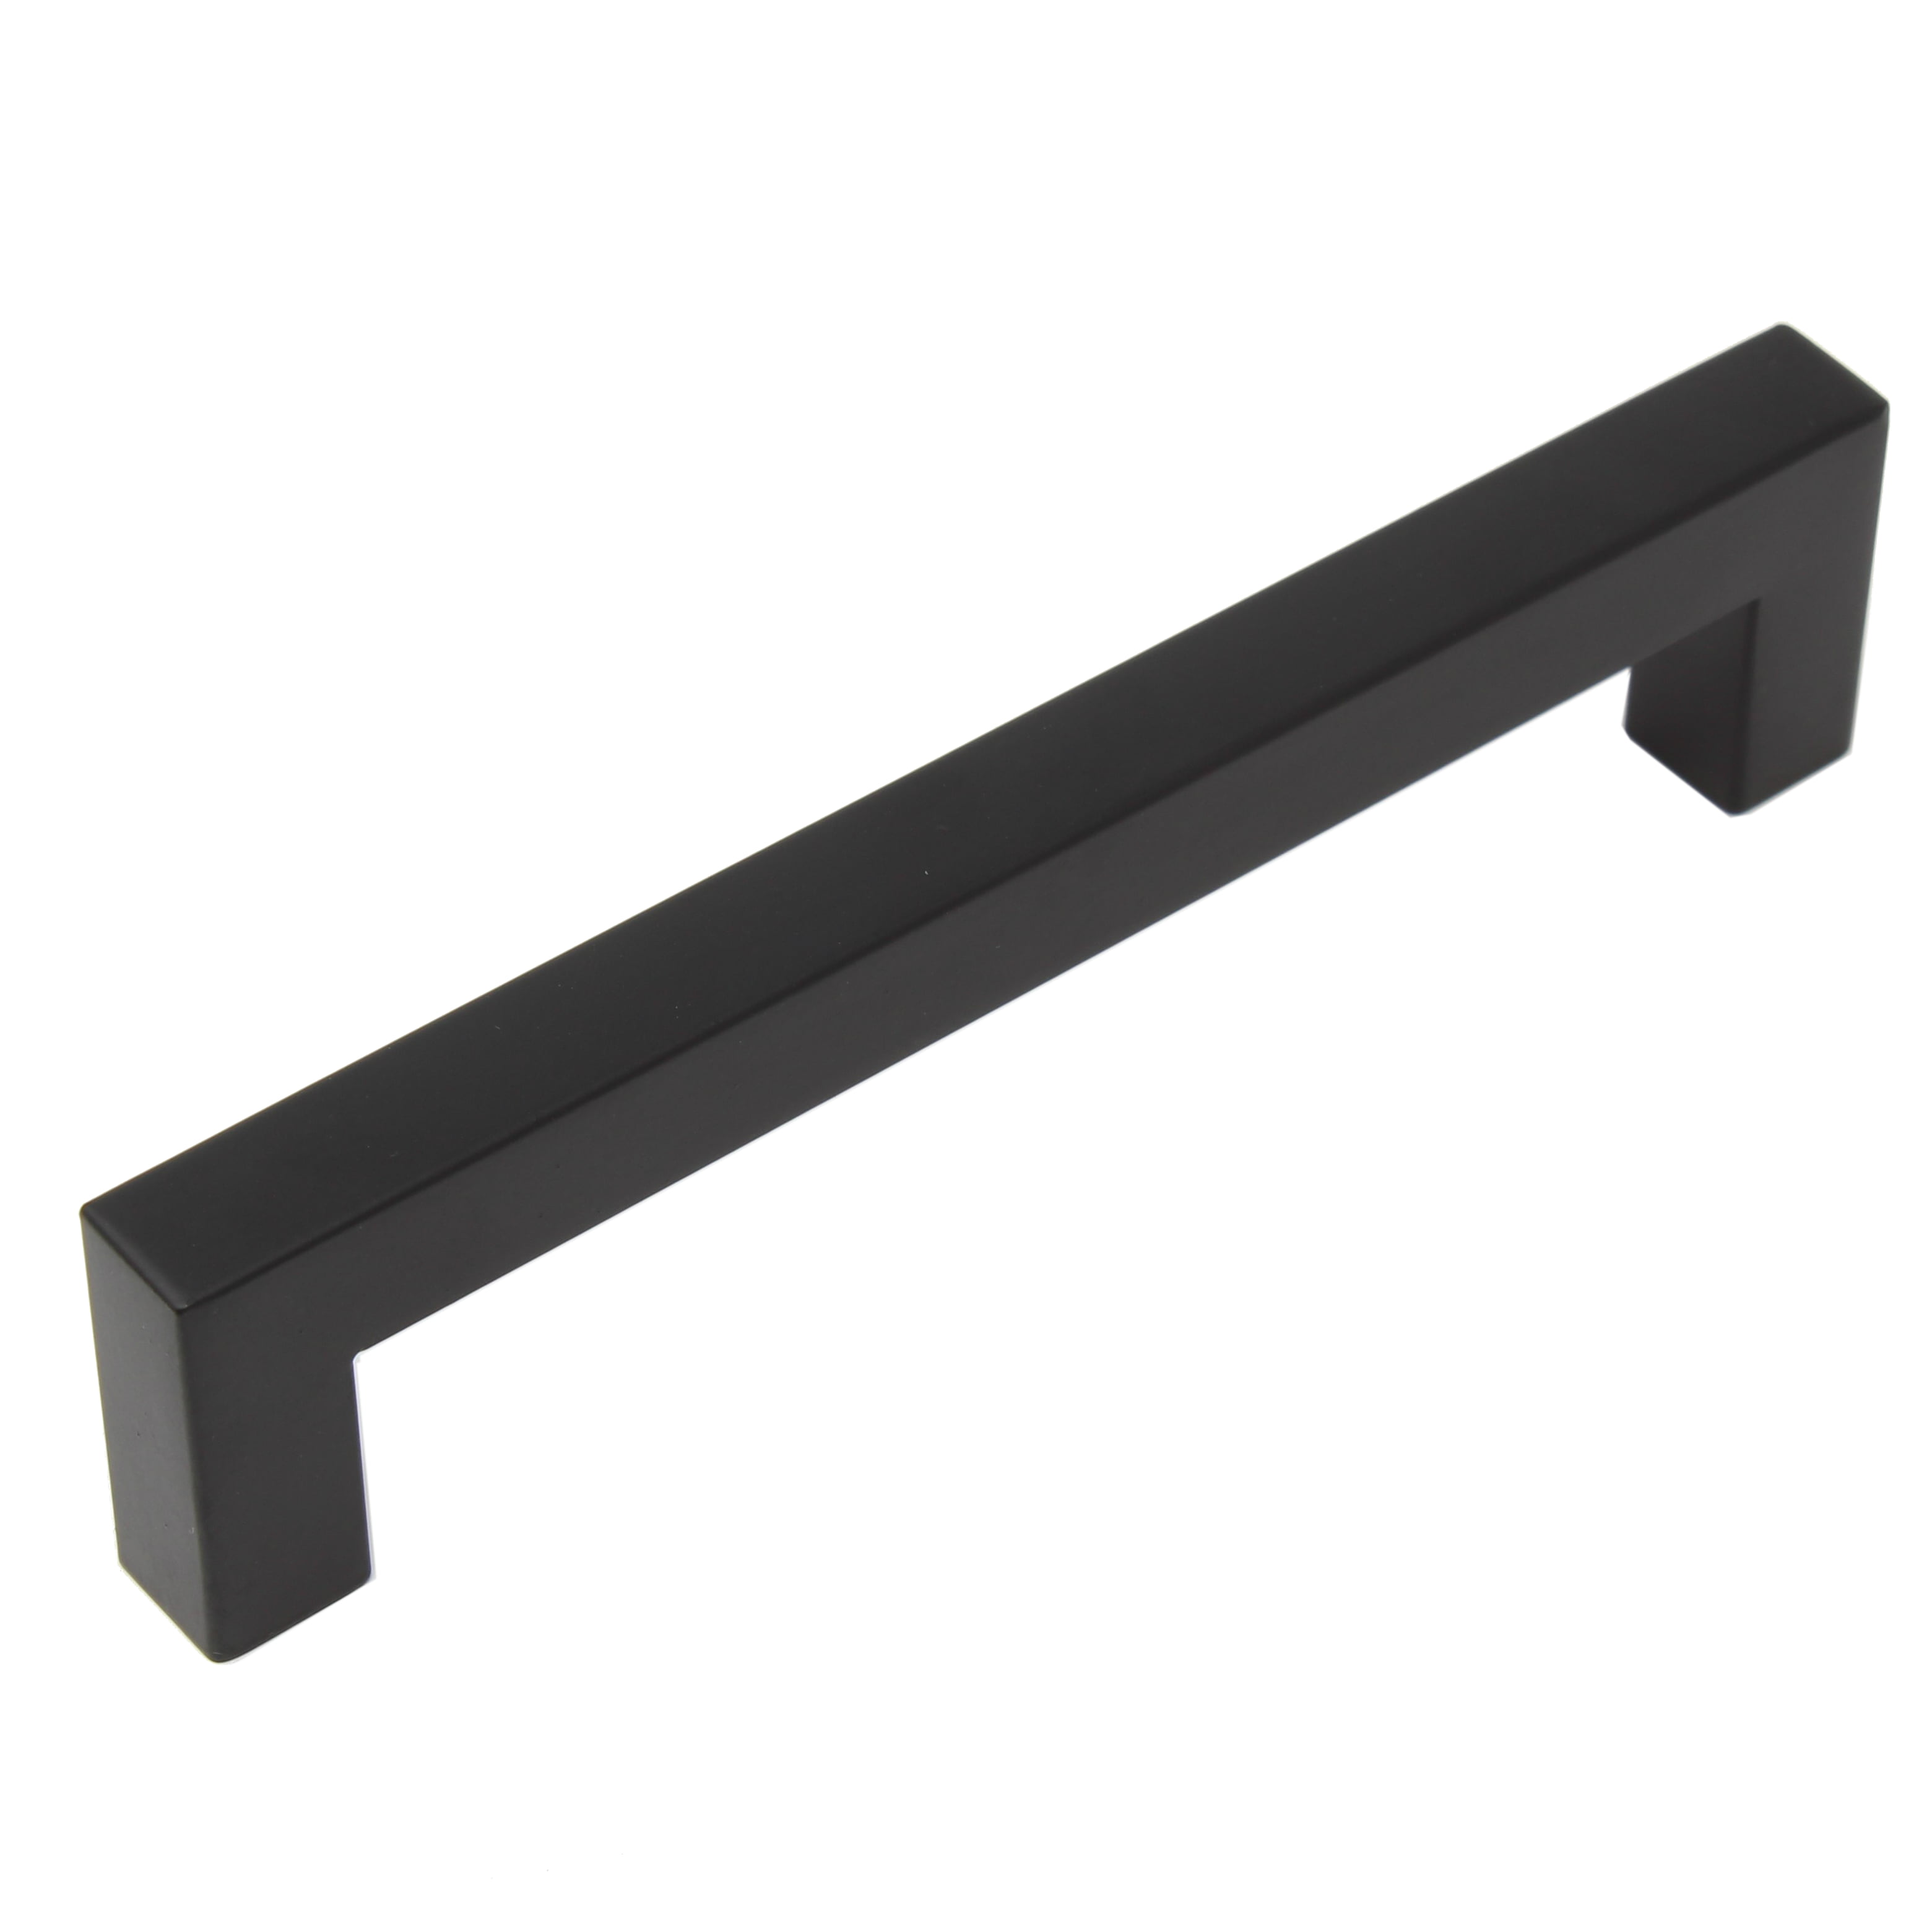 Flat Black Square Bar Cabinet Pulls: 5" Hole Center (128mm) | Modern Black Stainless Steel Kitchen Cabinet Handles